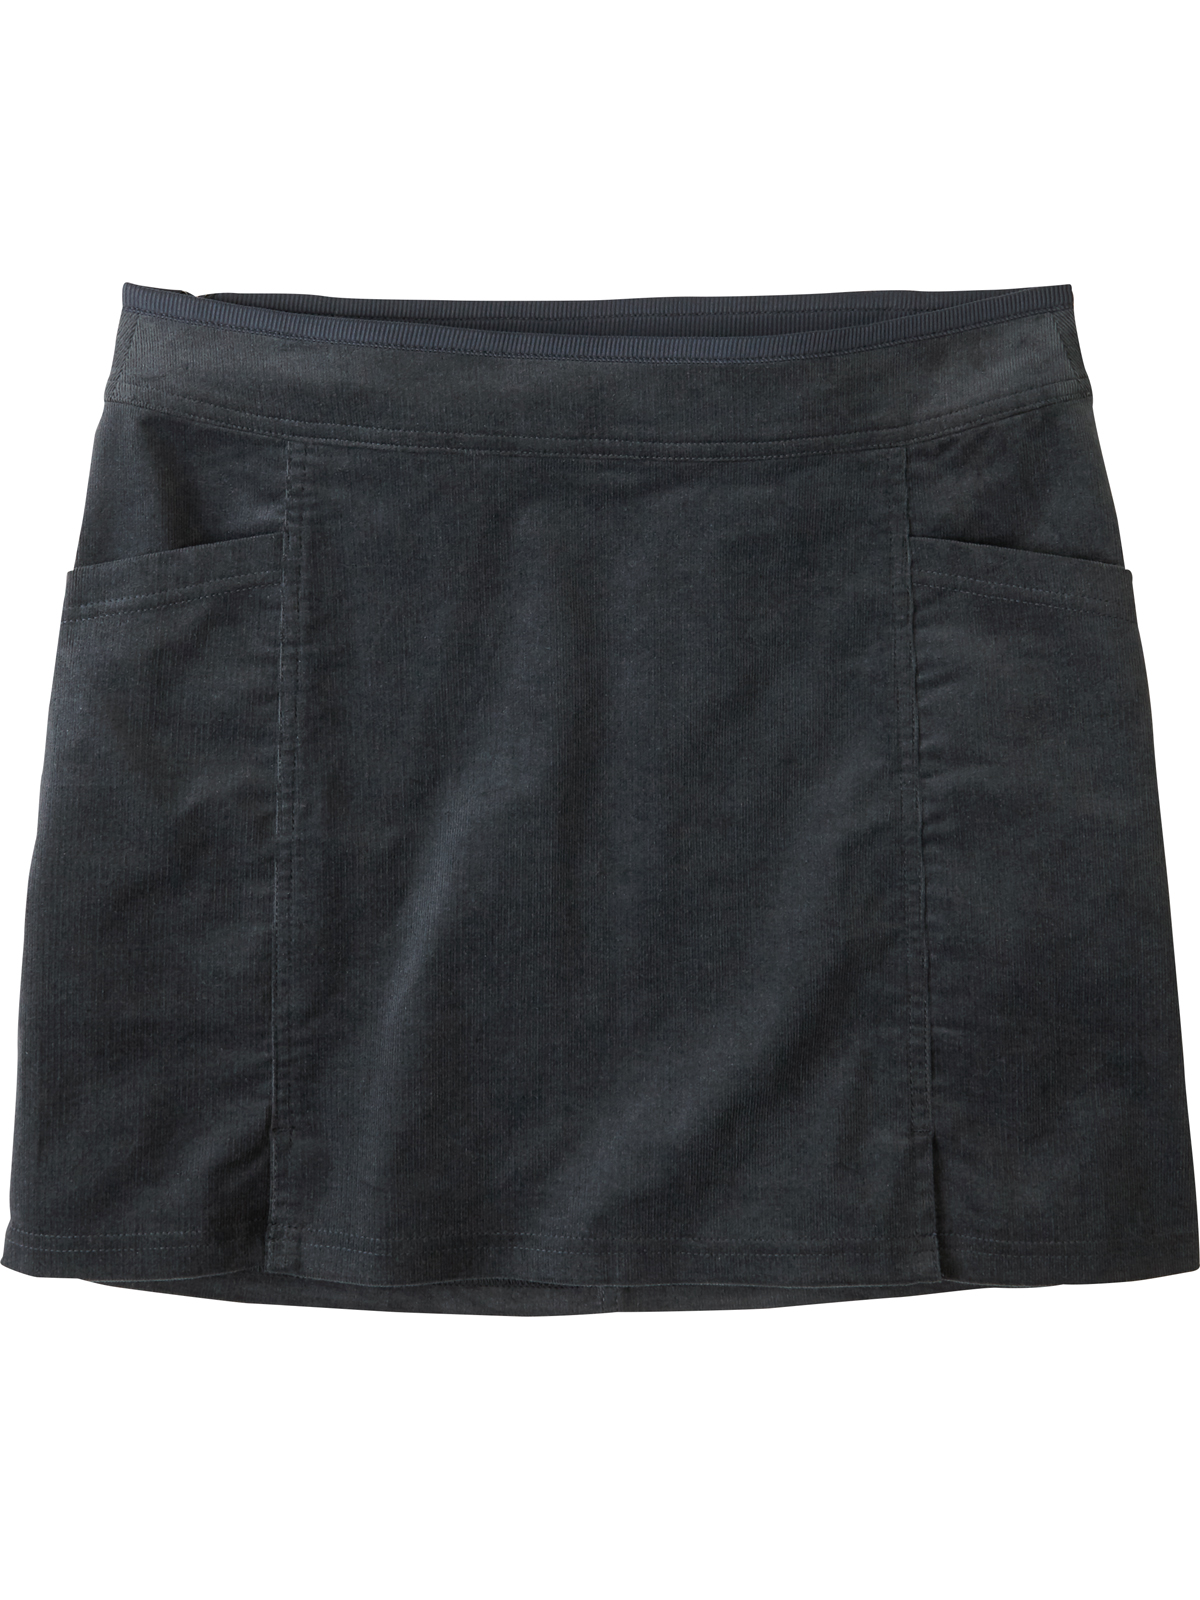 Corduroy Kuhl Title Clothing | Skirt Detail Nine